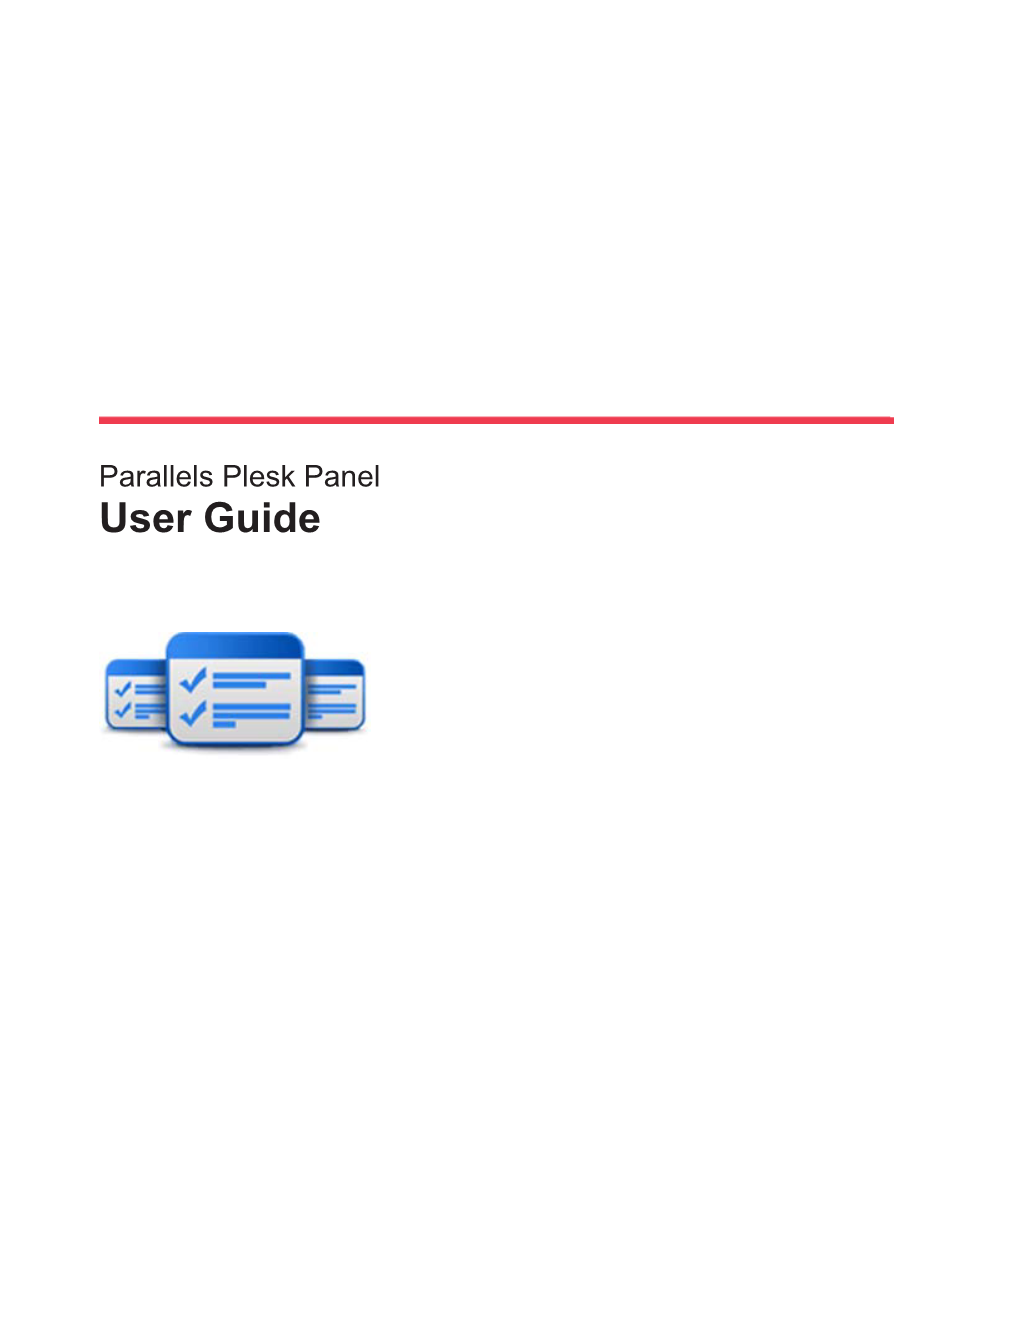 Parallels Plesk Panel User Guide